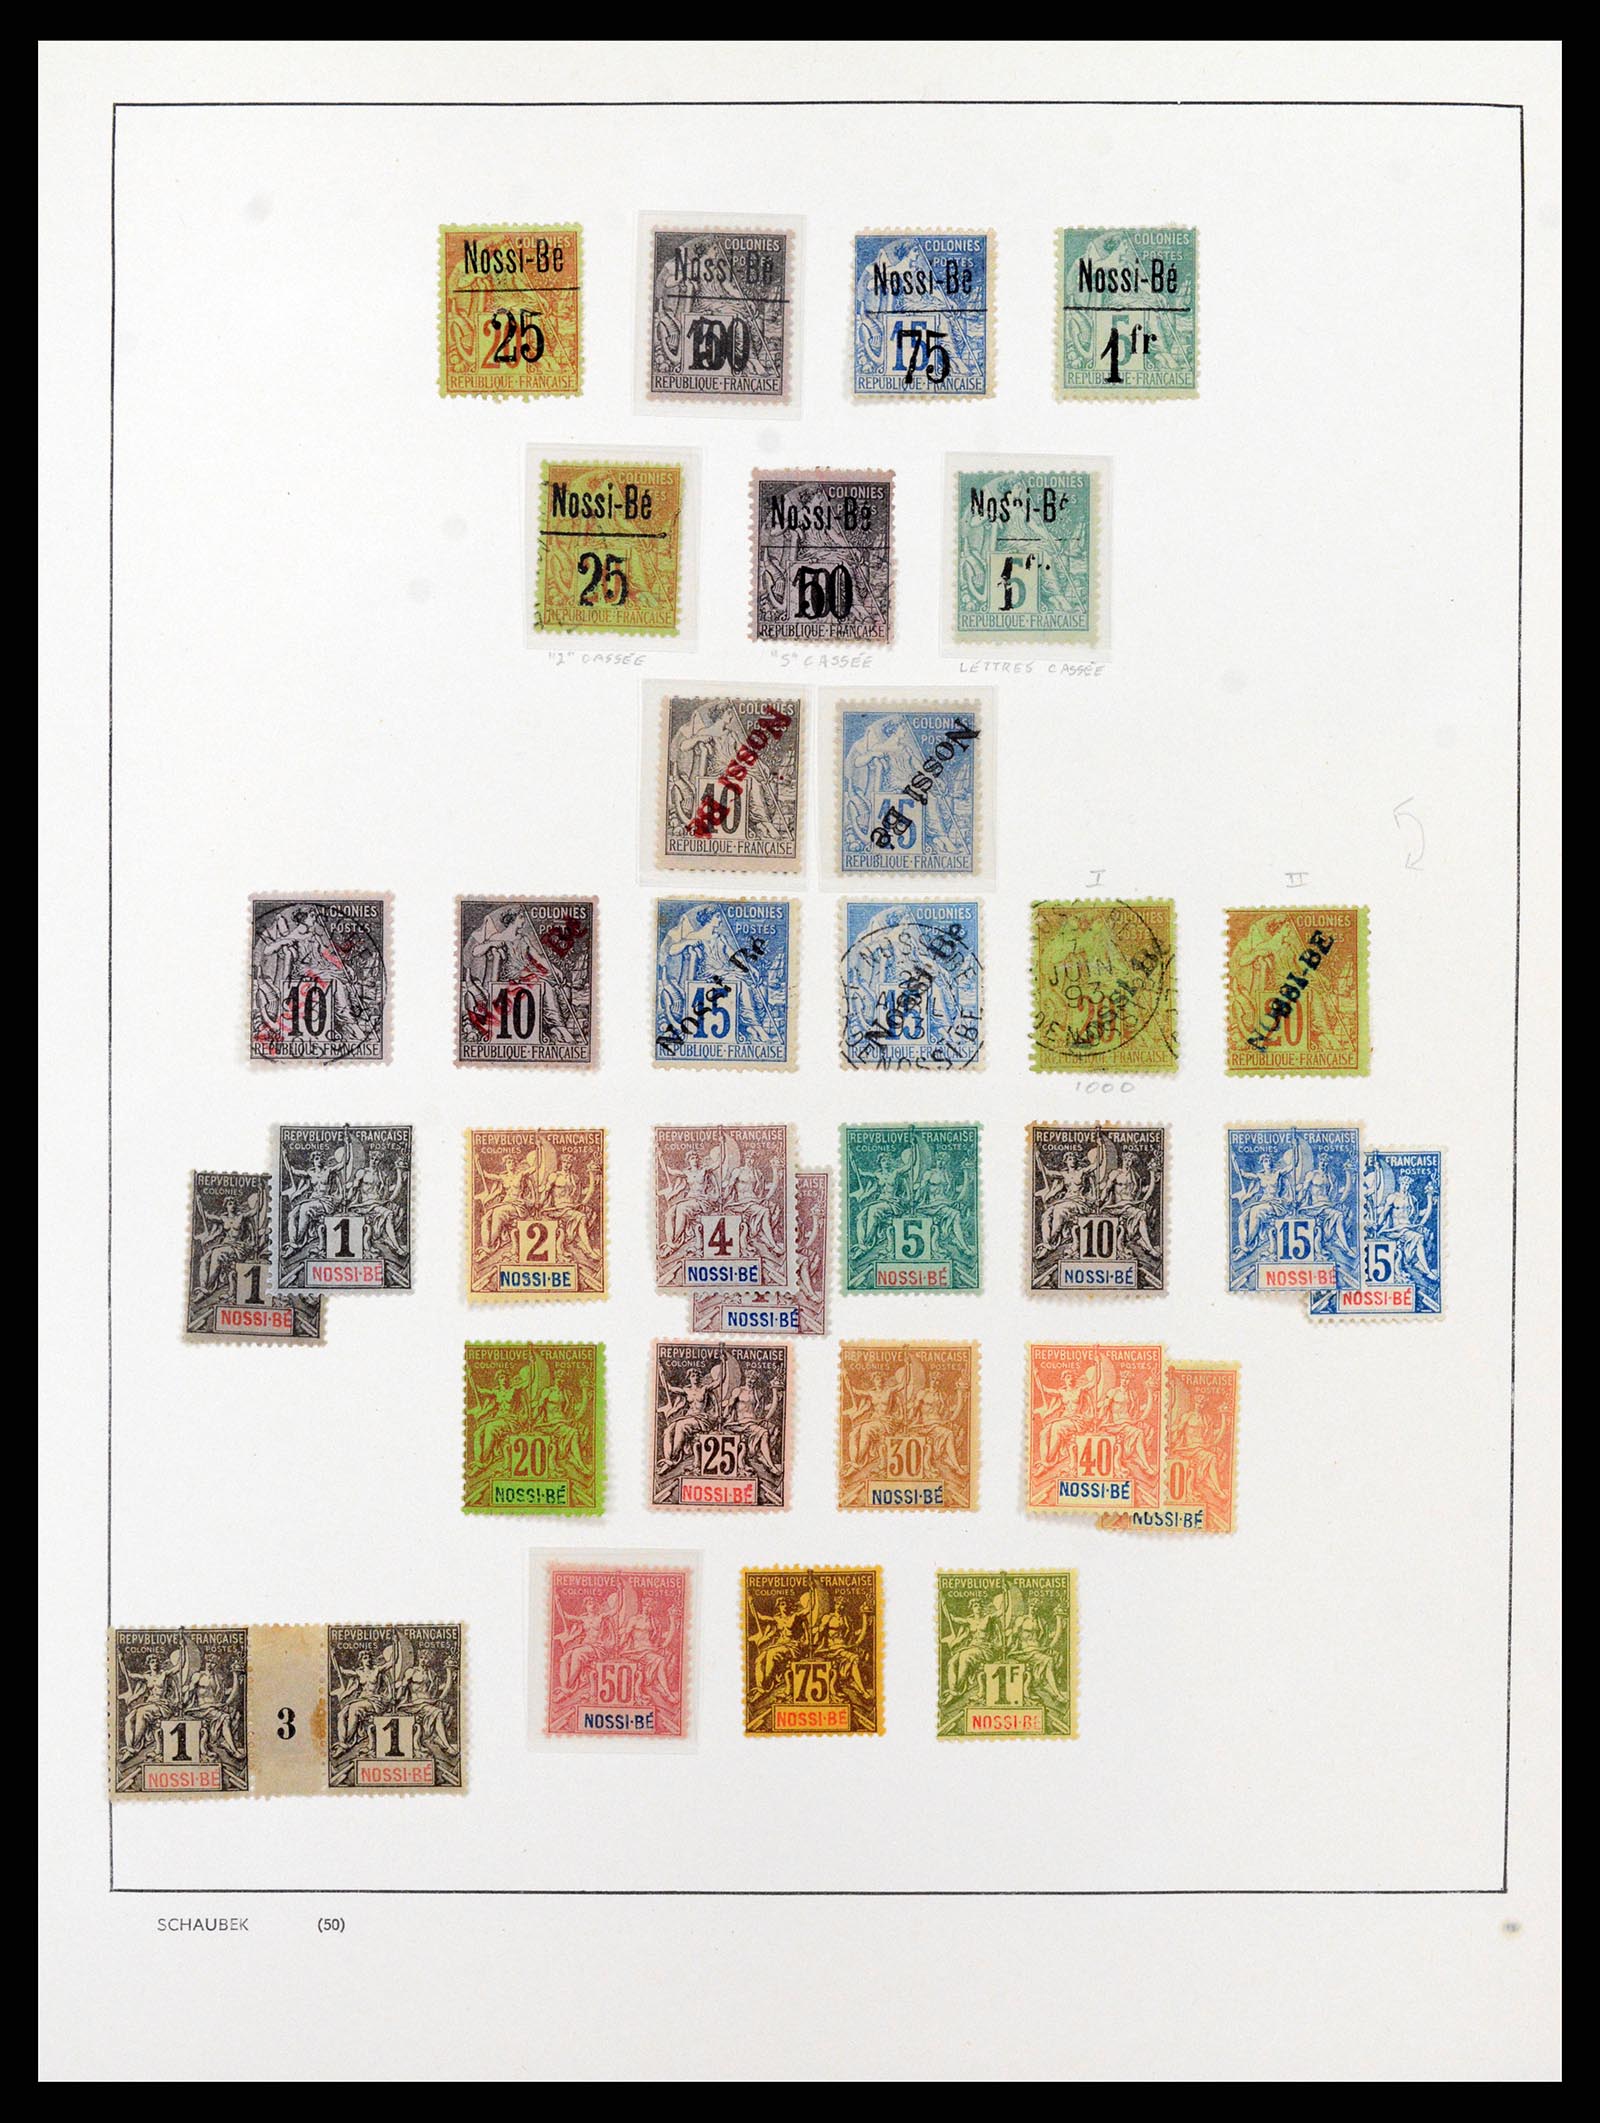 37929 022 - Stamp Collection 37929 Madagascar 1889-2000.